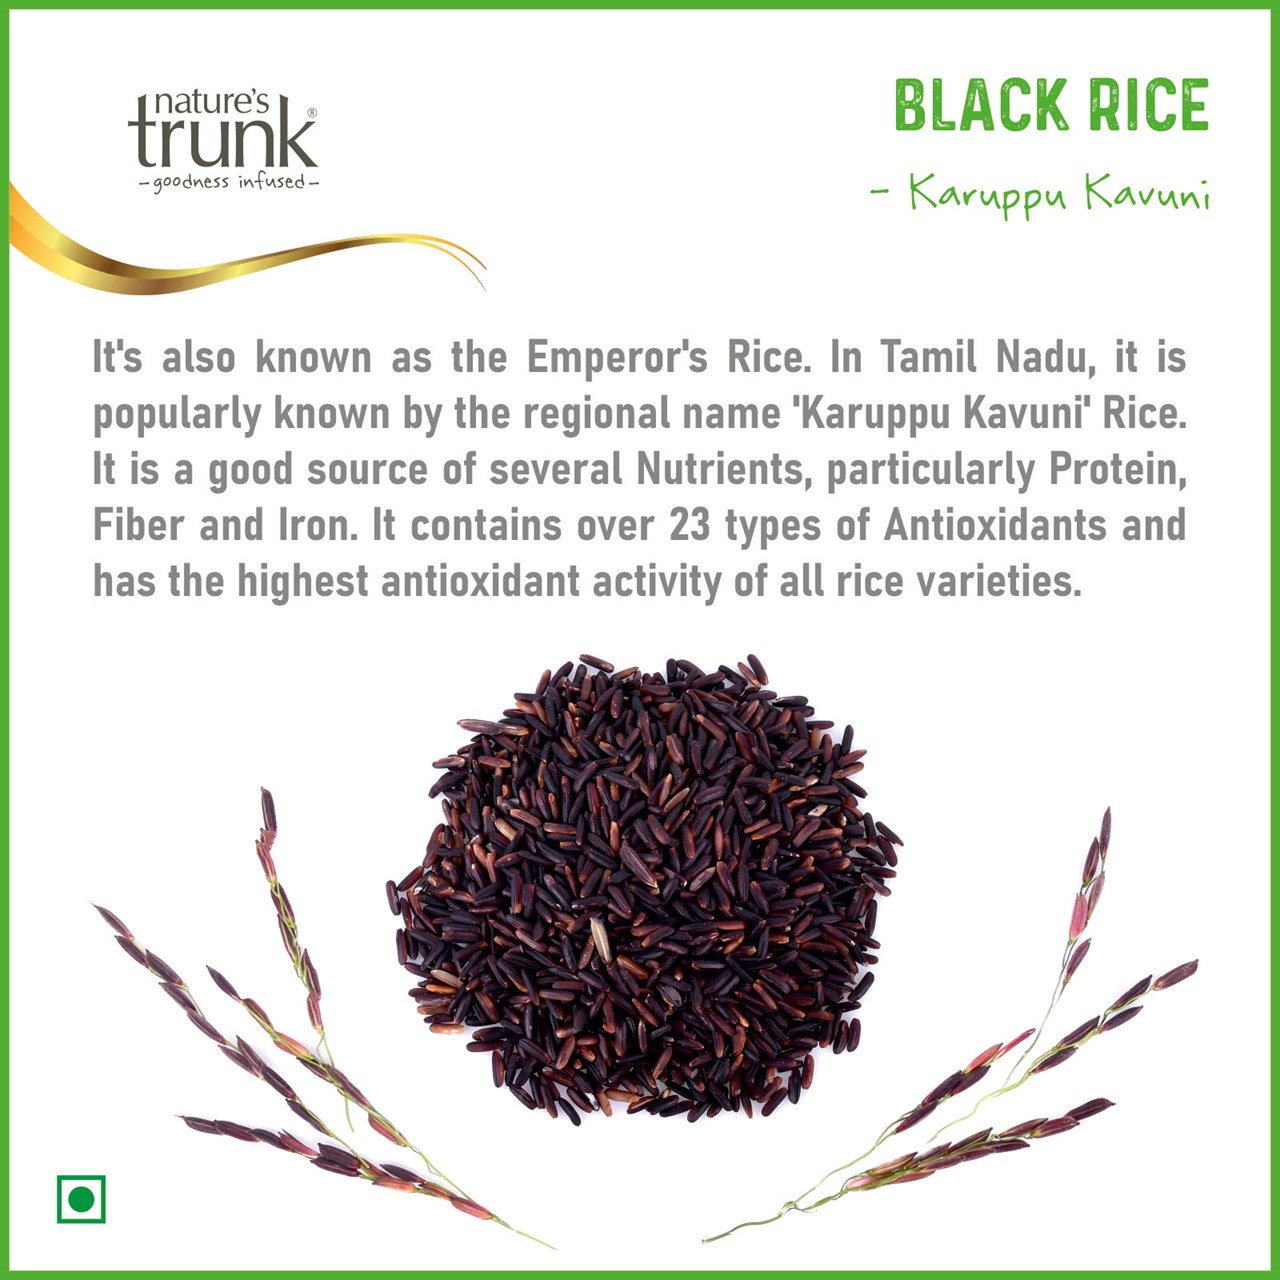 Picture of Black Rice Flakes ( Karuppu Kavuni Rice ) 600g